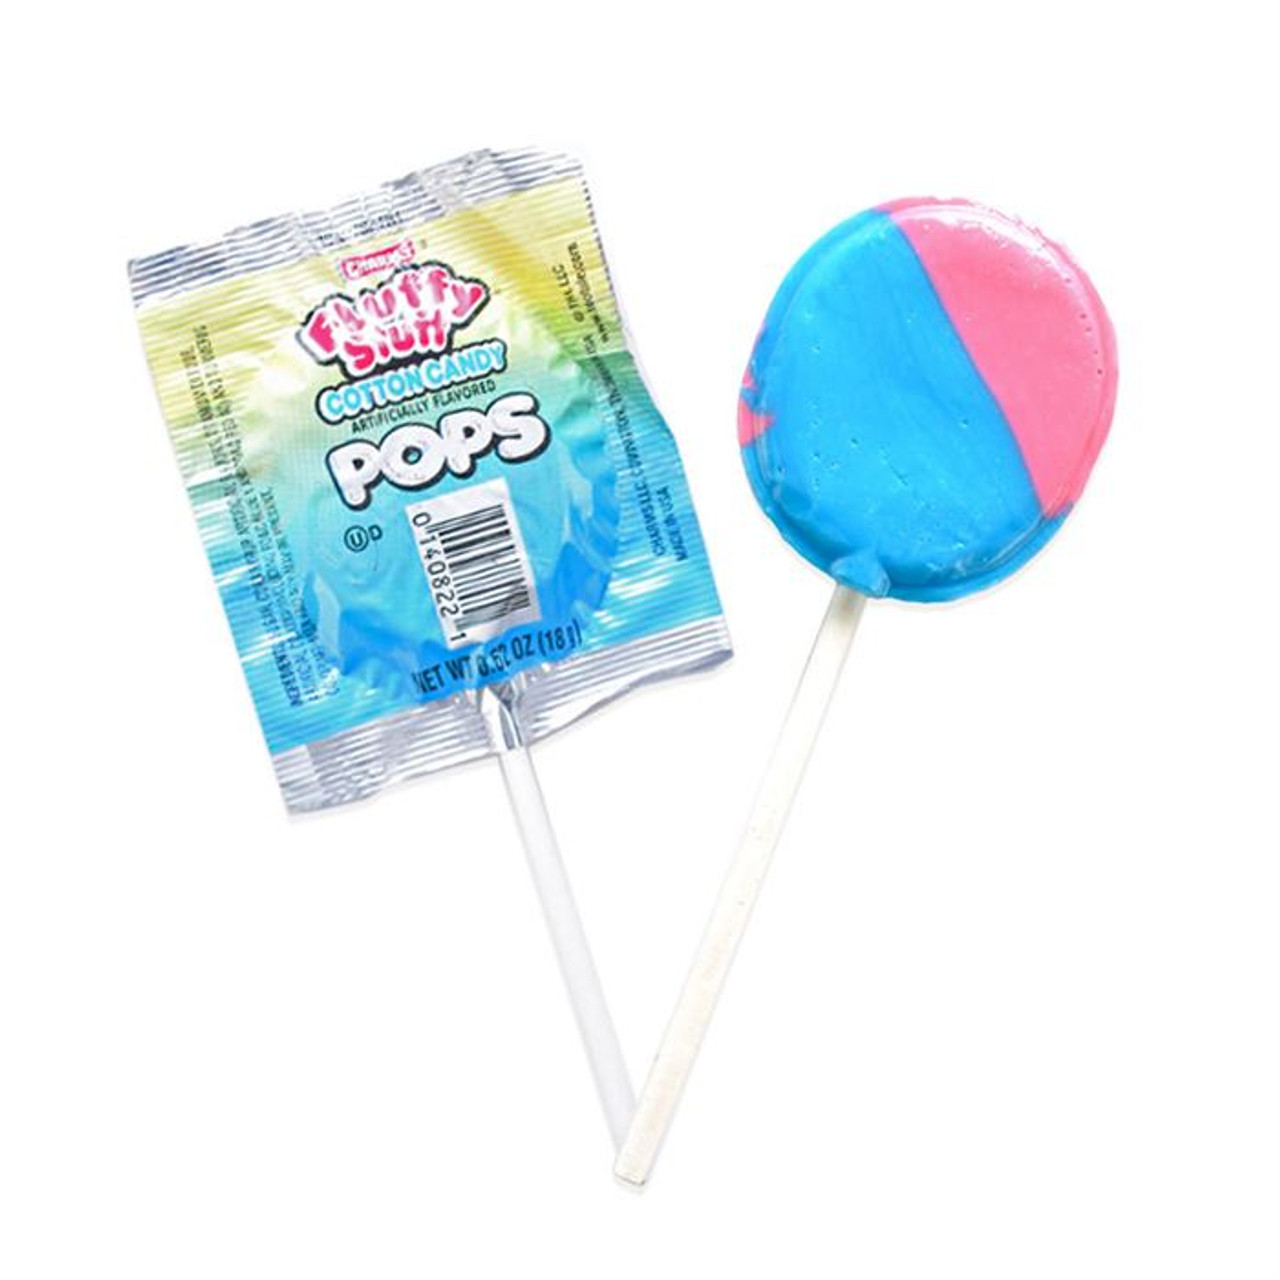 Charms Fluffy Stuff Cotton Candy Lollipop 18 g (48 Pack) – Exotics